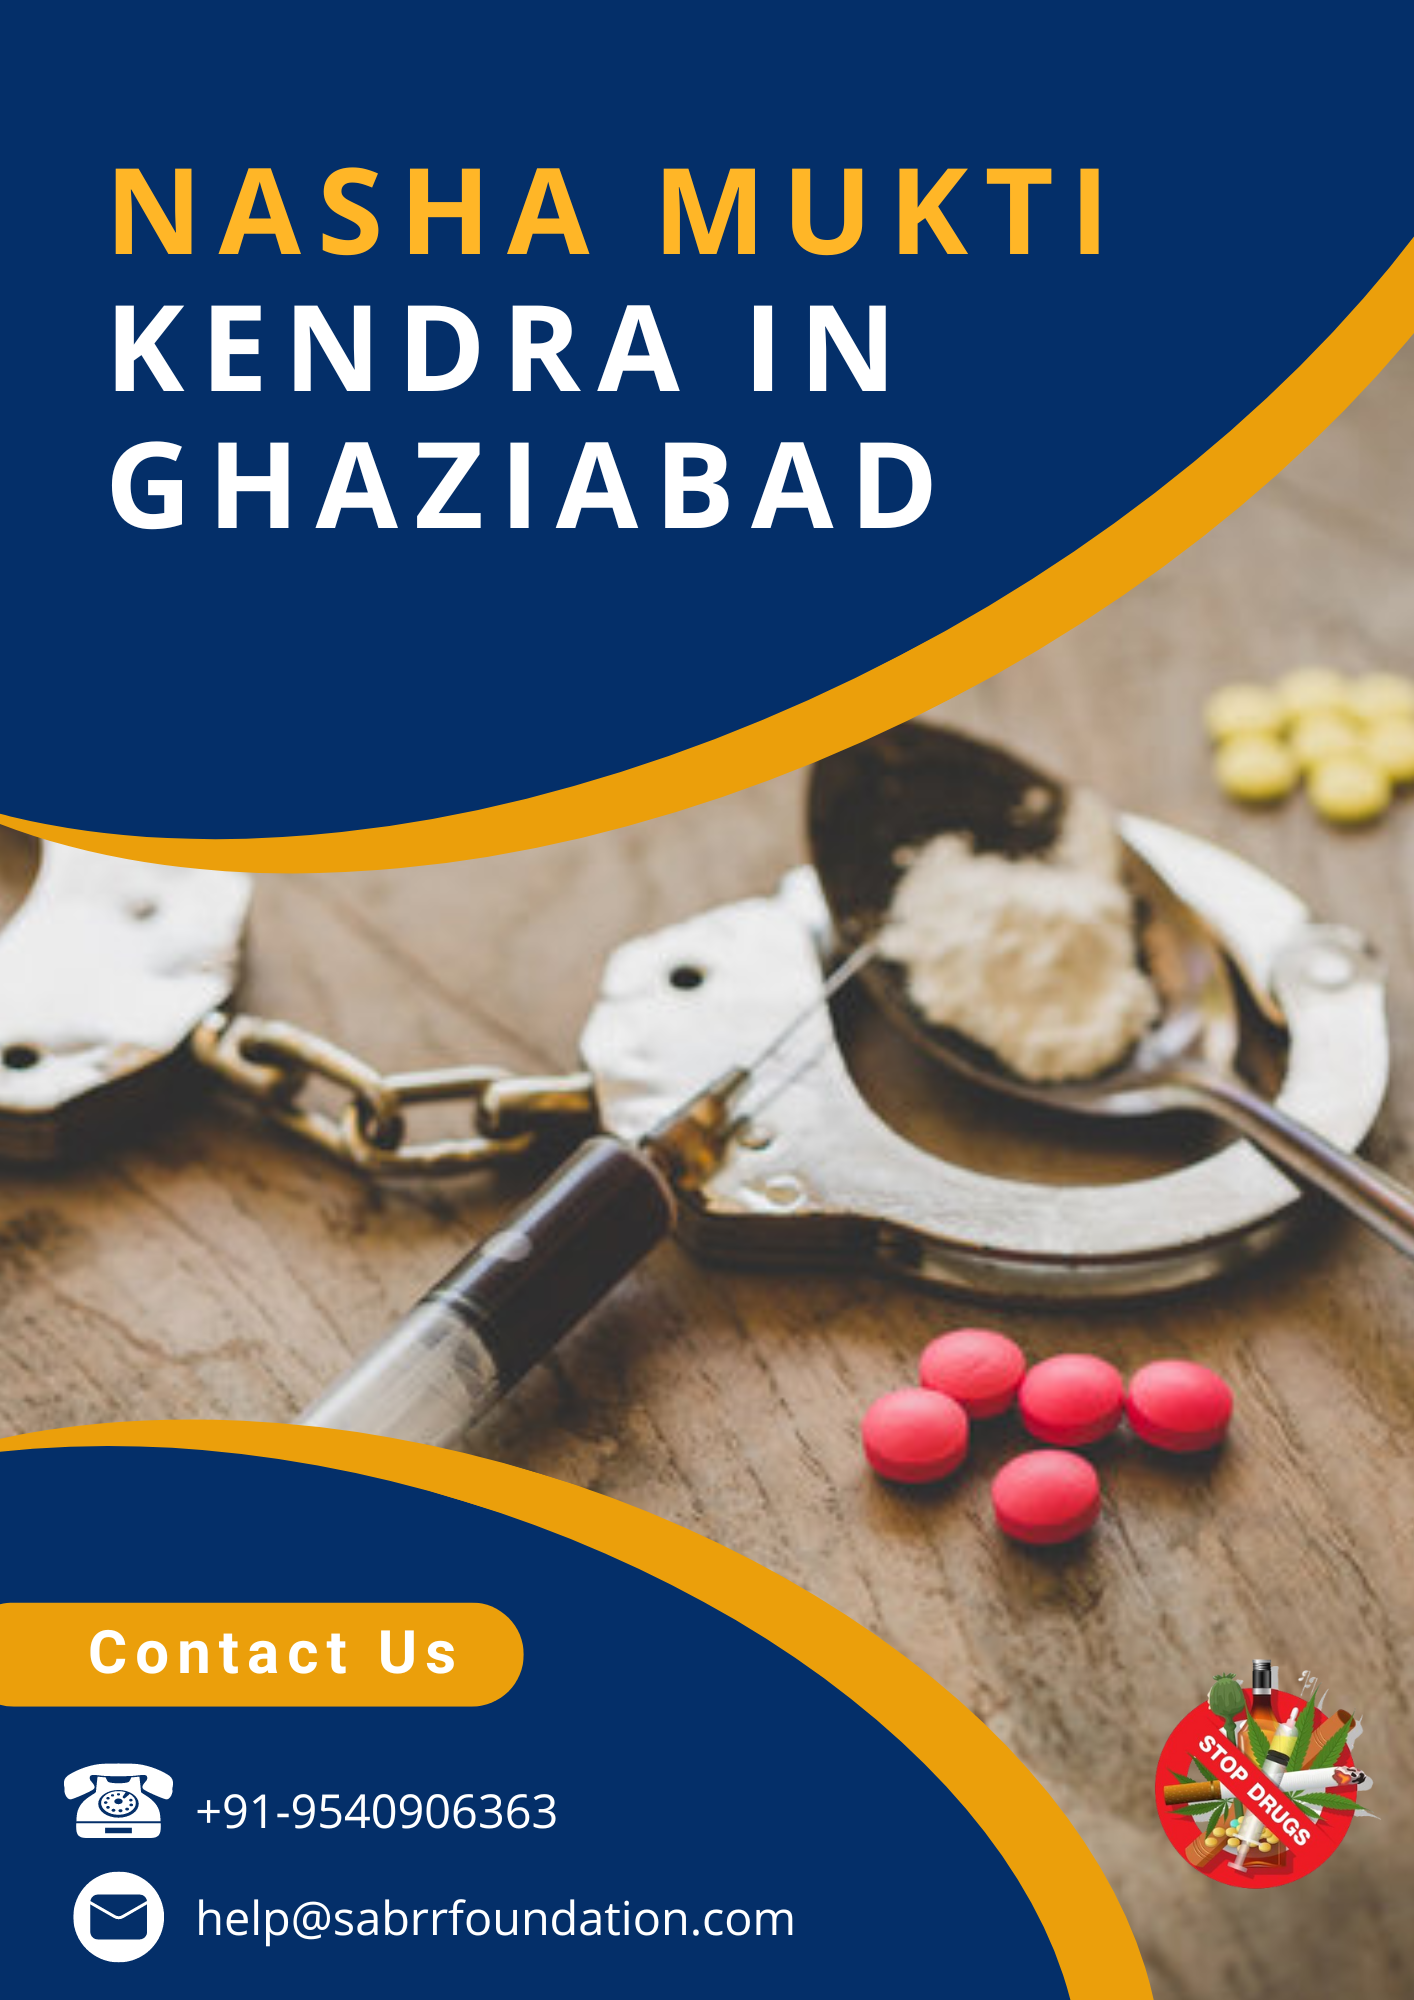 Nasha Mukti Kendra in Ghaziabad - Classified Ads Shop